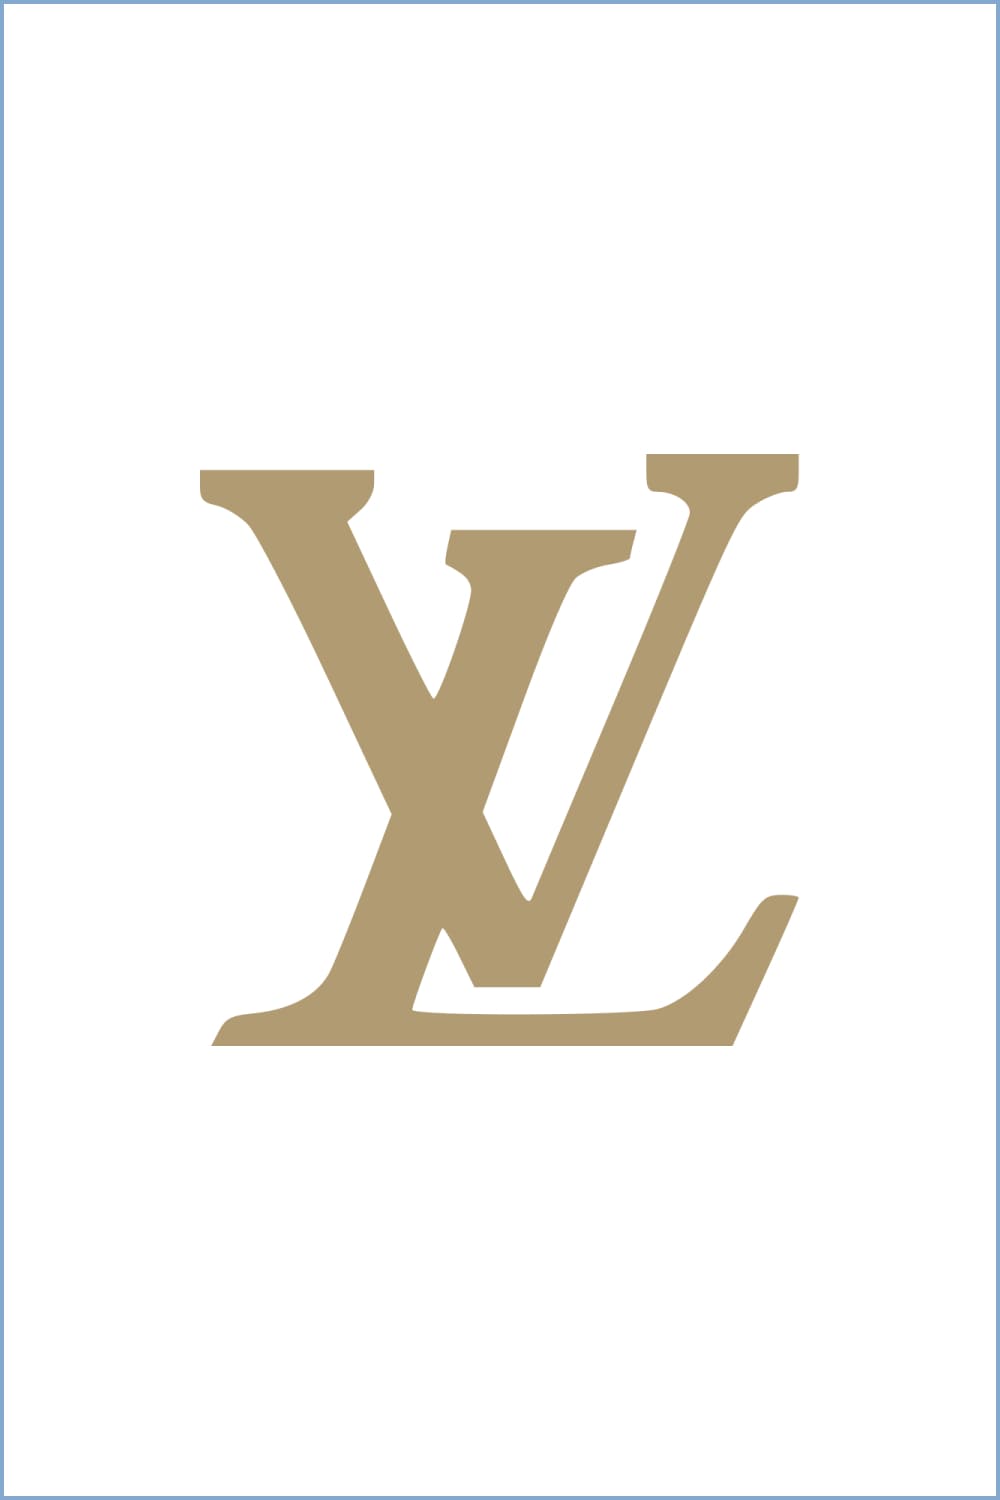 Beige Louis Vuitton logo on a white background.